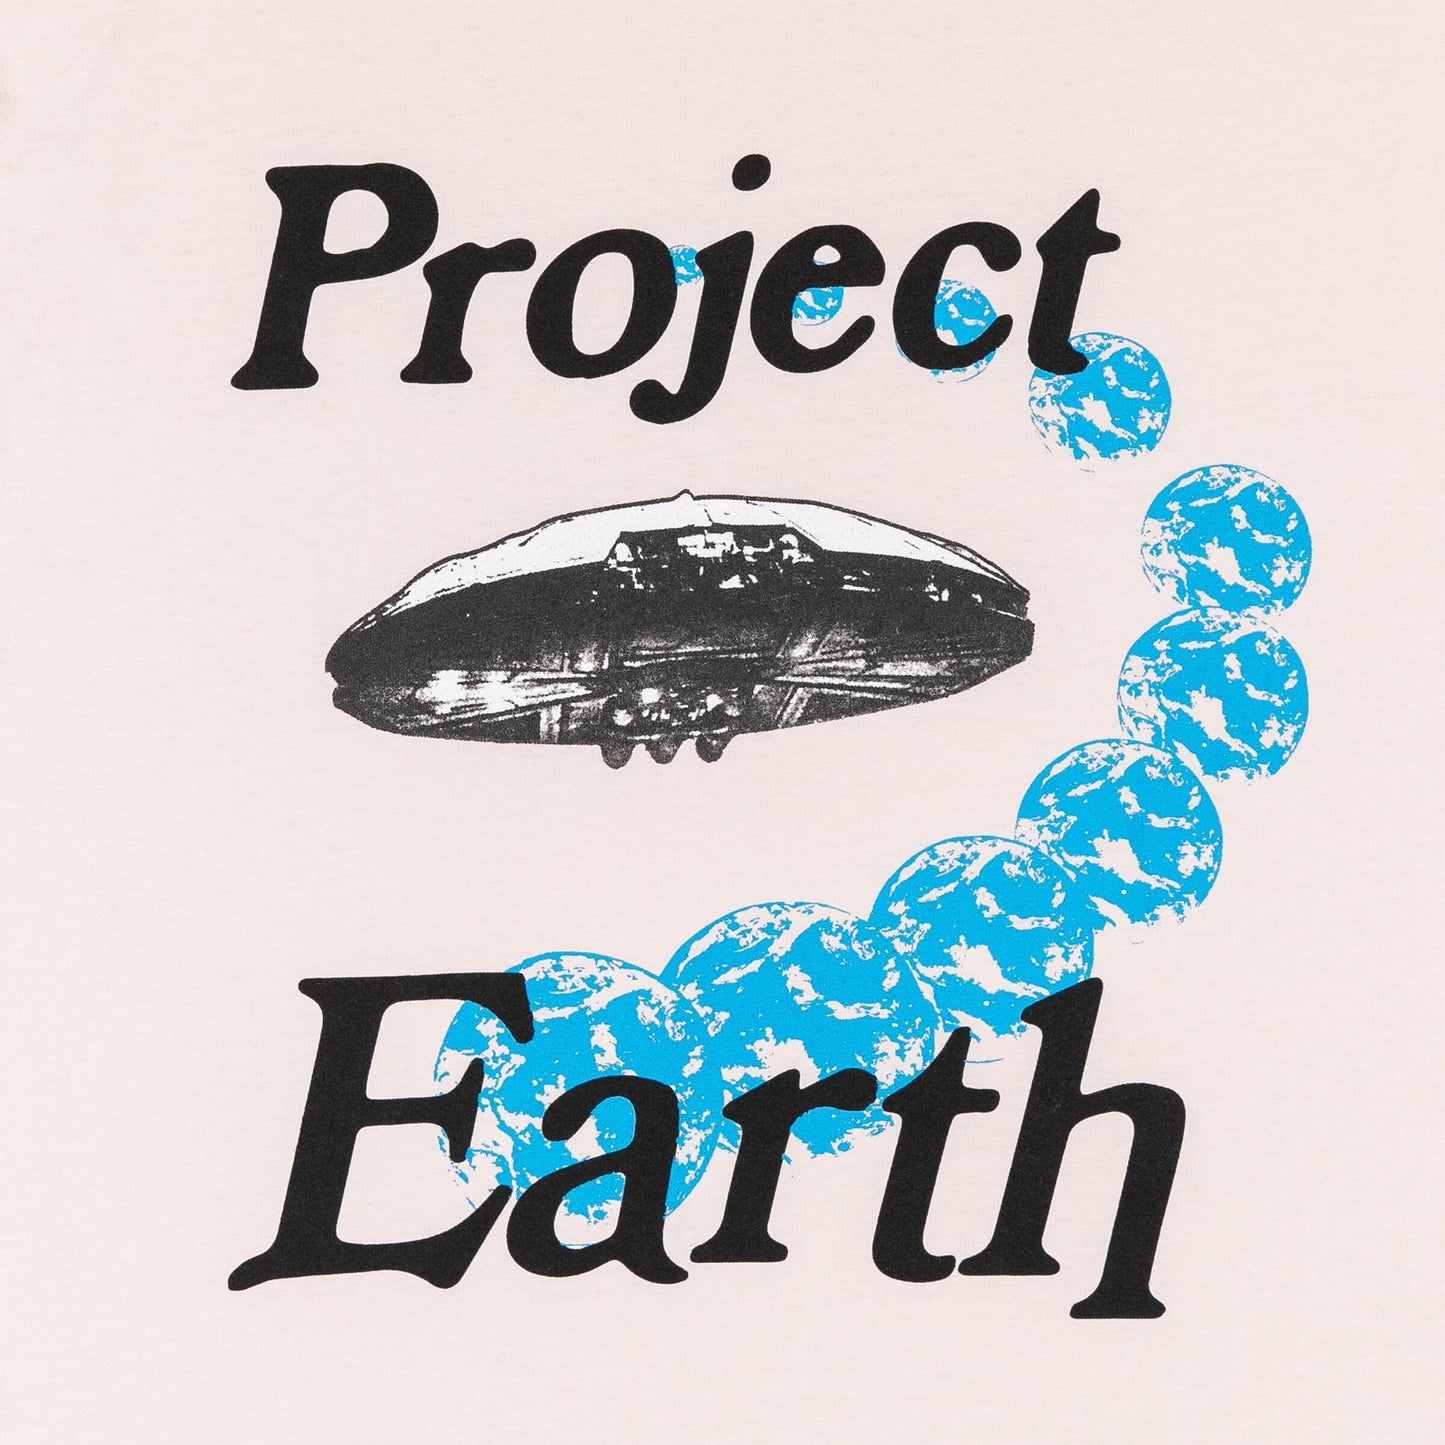 Project Earth Tee - Light Khaki